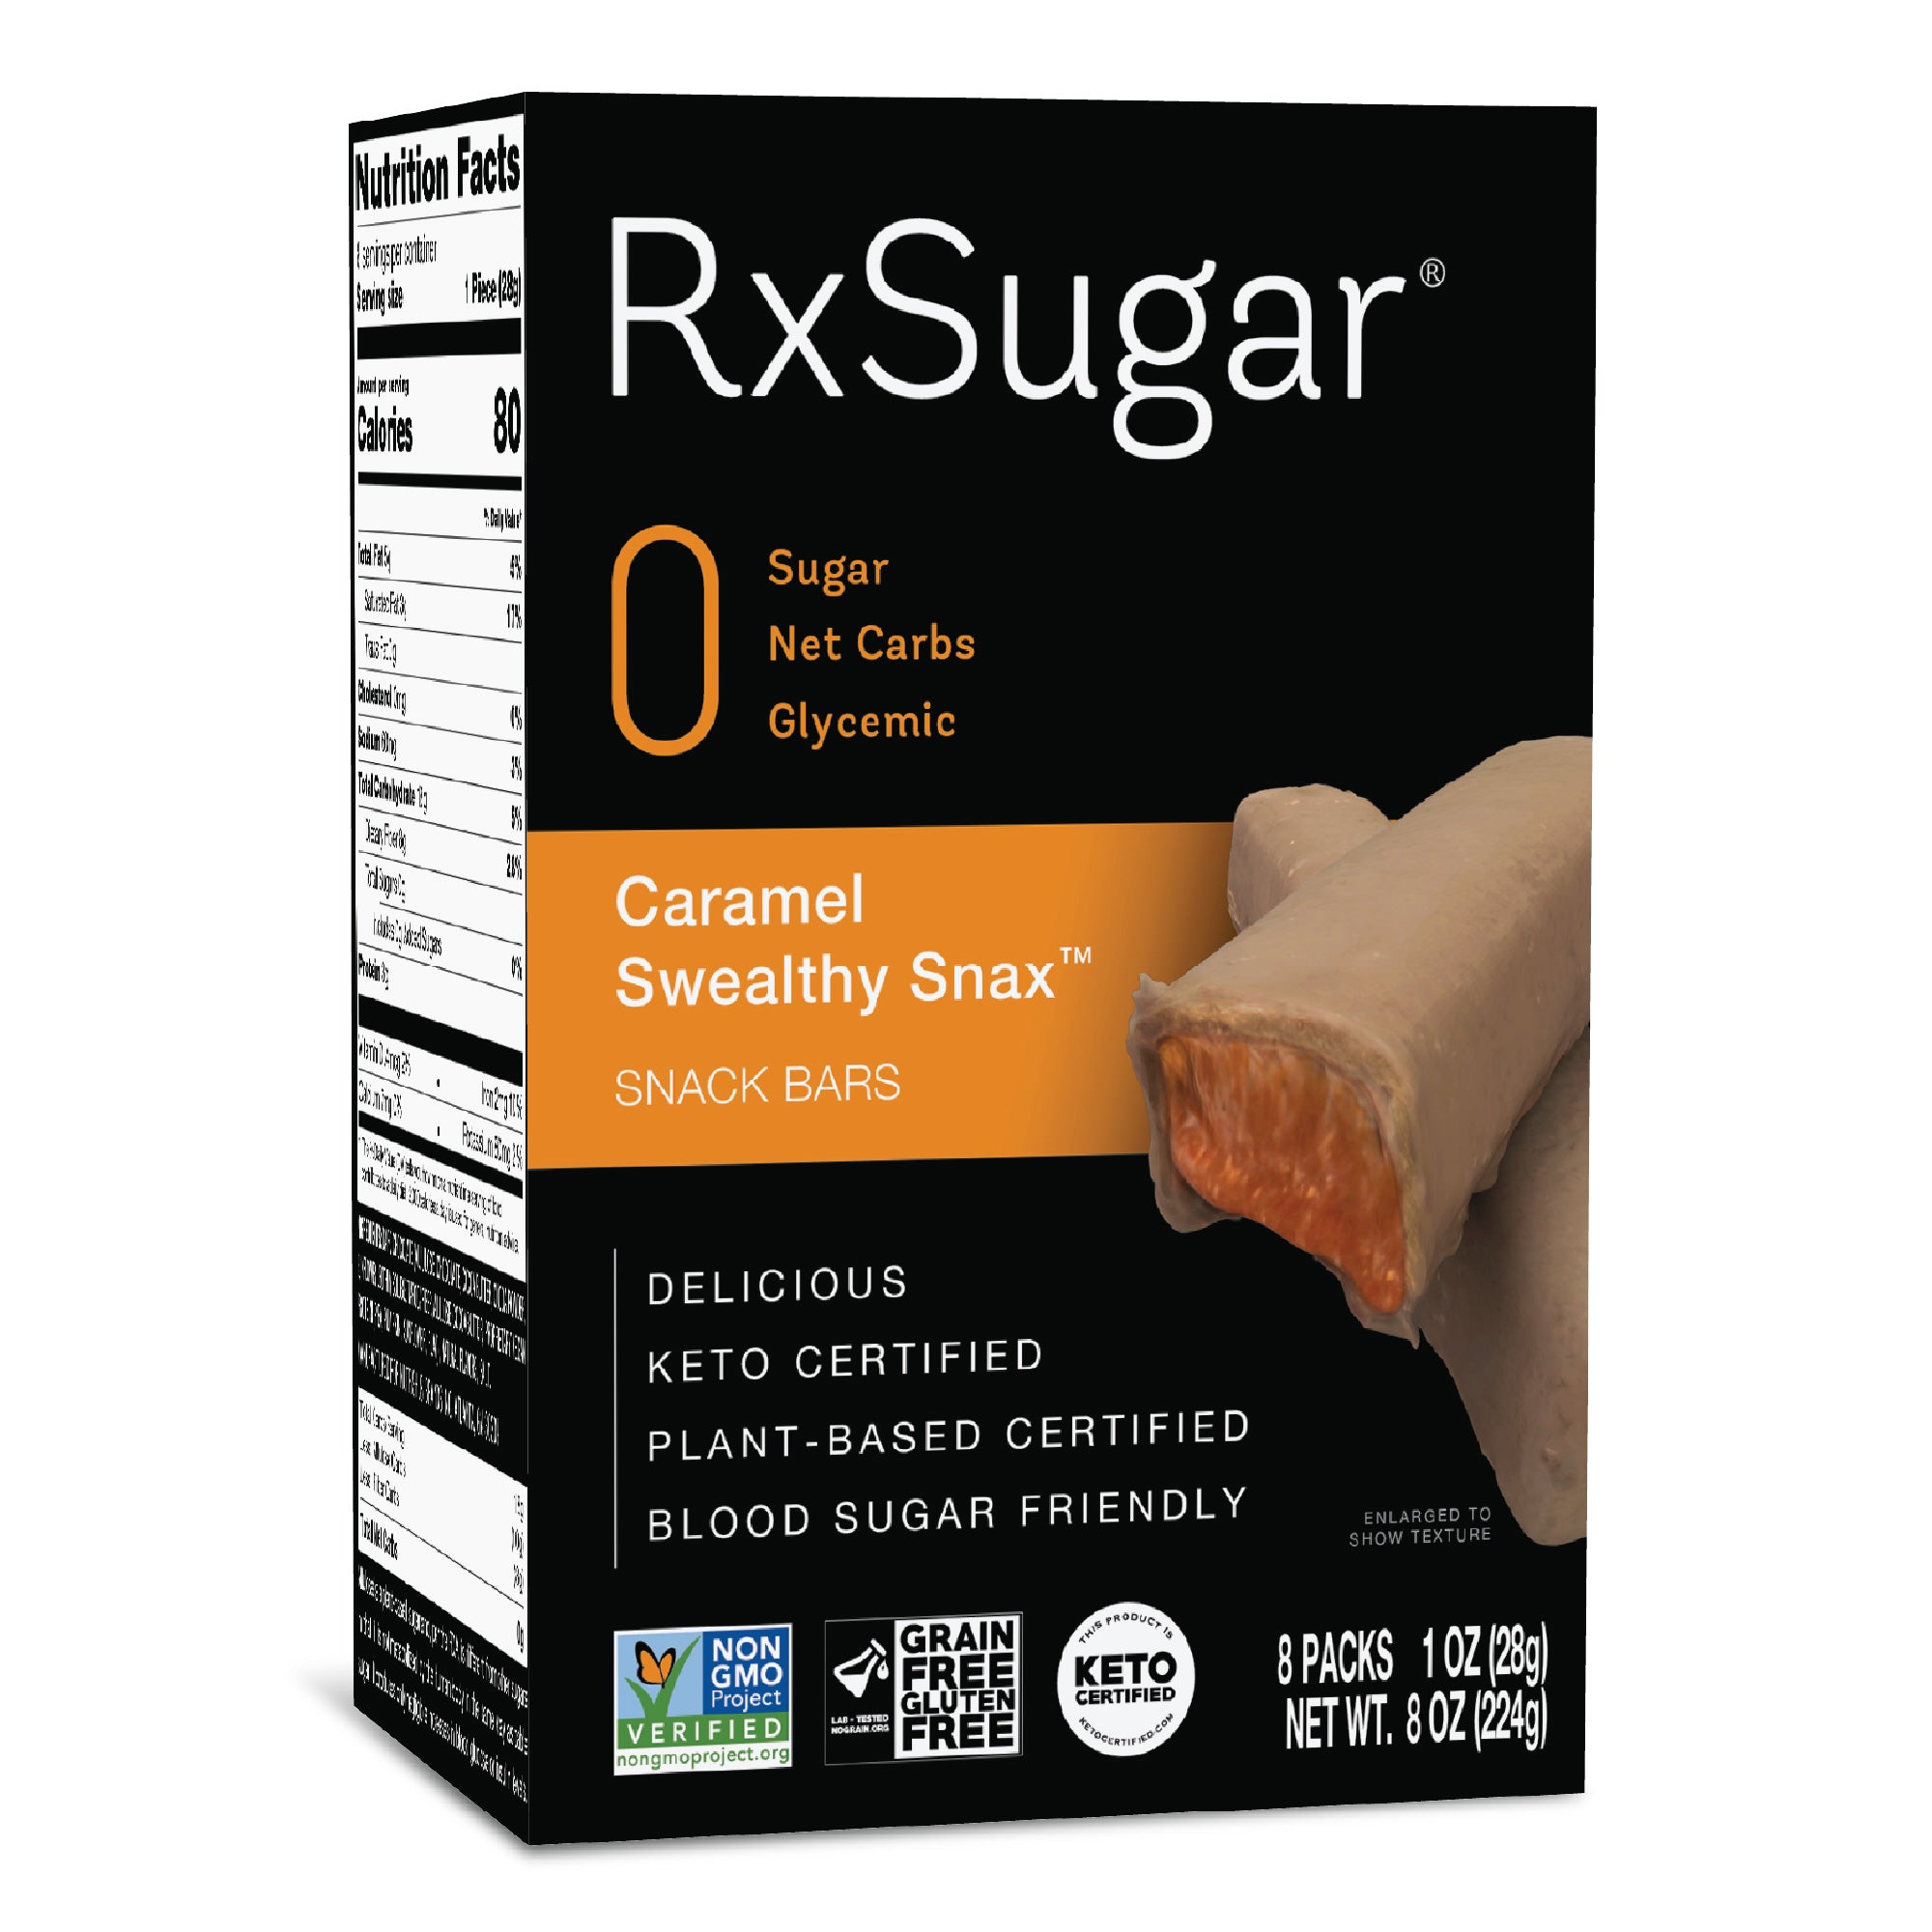 RxSugar Caramel Swealthy Snax front